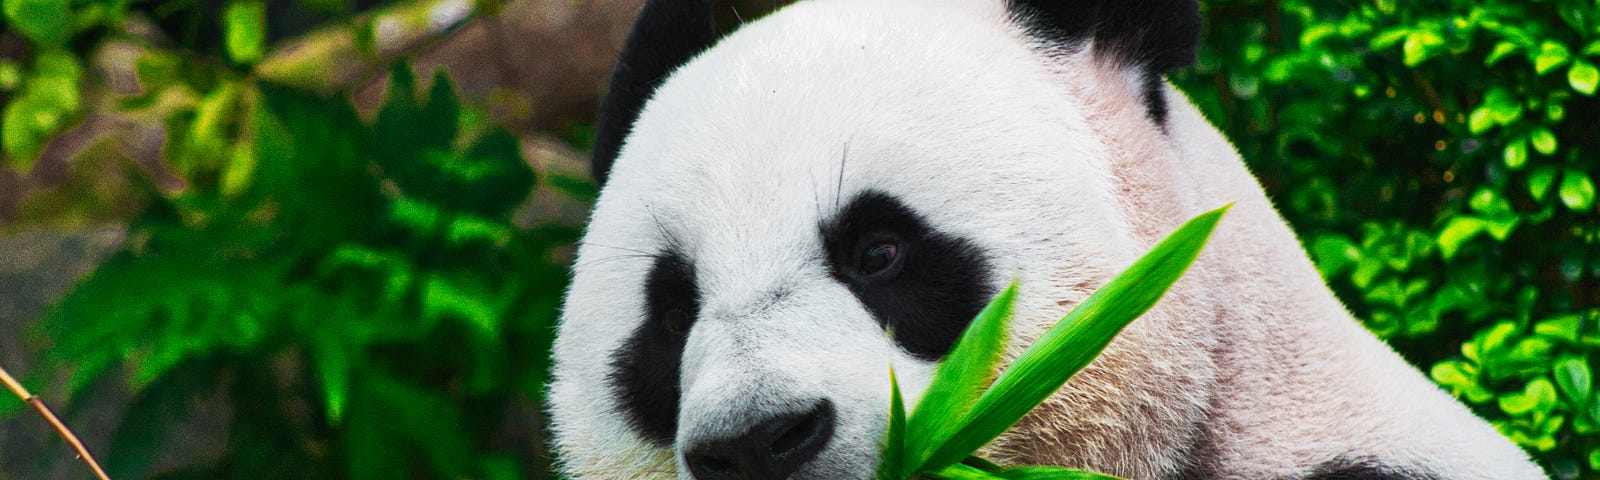 A giant panda eating bamboo.